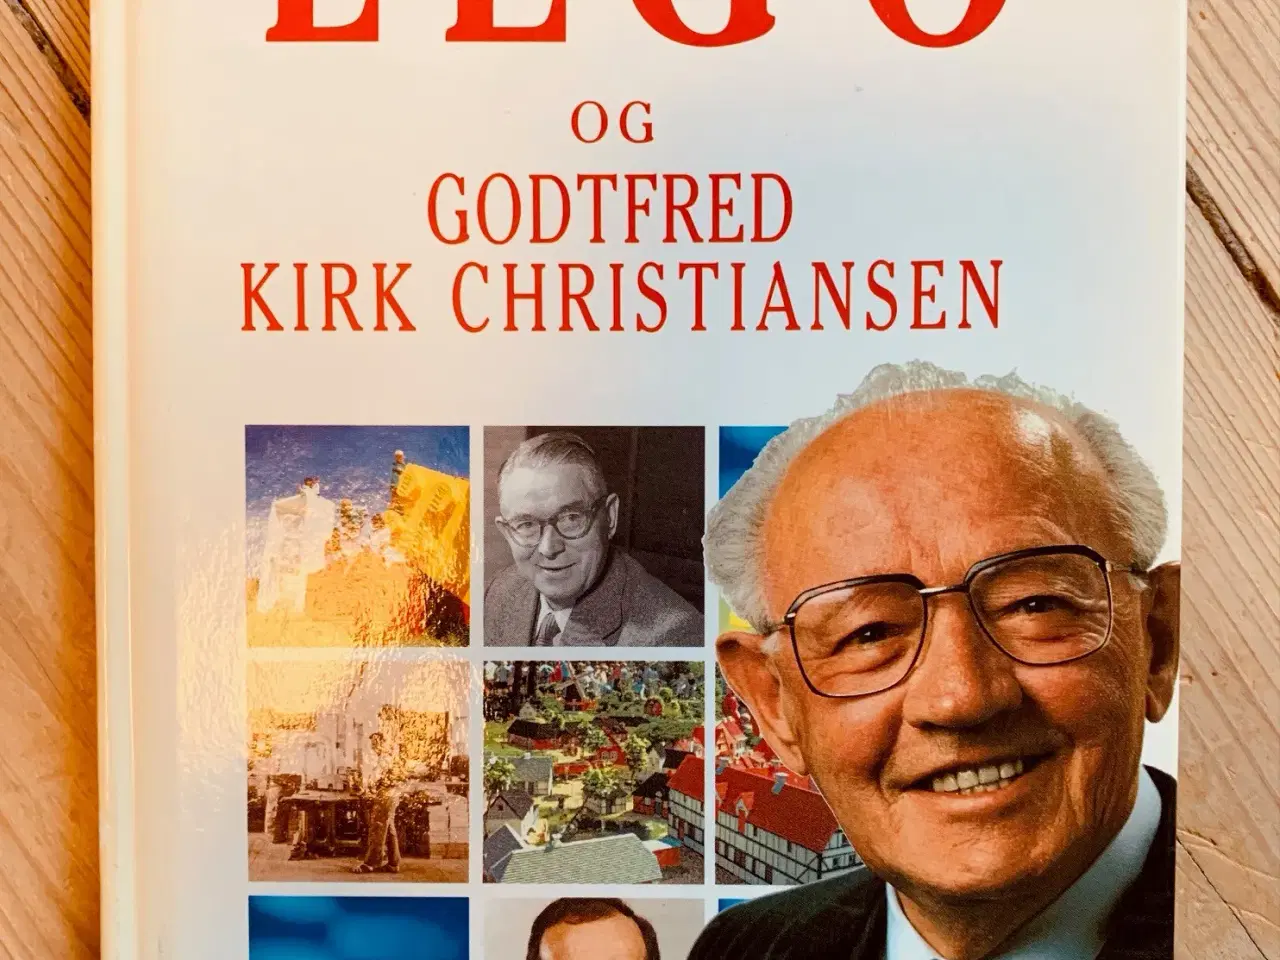 Billede 1 - Lego og Godtfred Kirk Christiansen (1997)